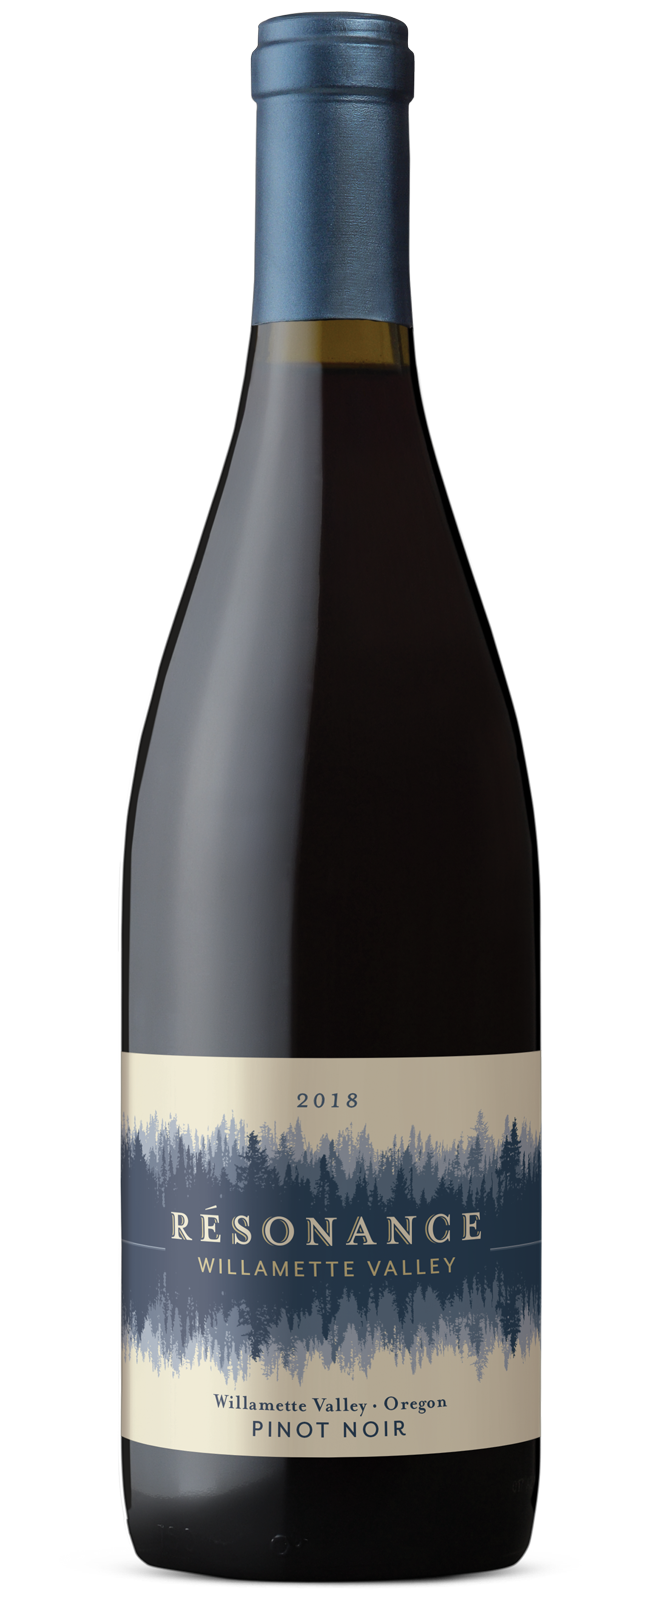 Bottle of 2018 Résonance Willamette Valley Pinot noir